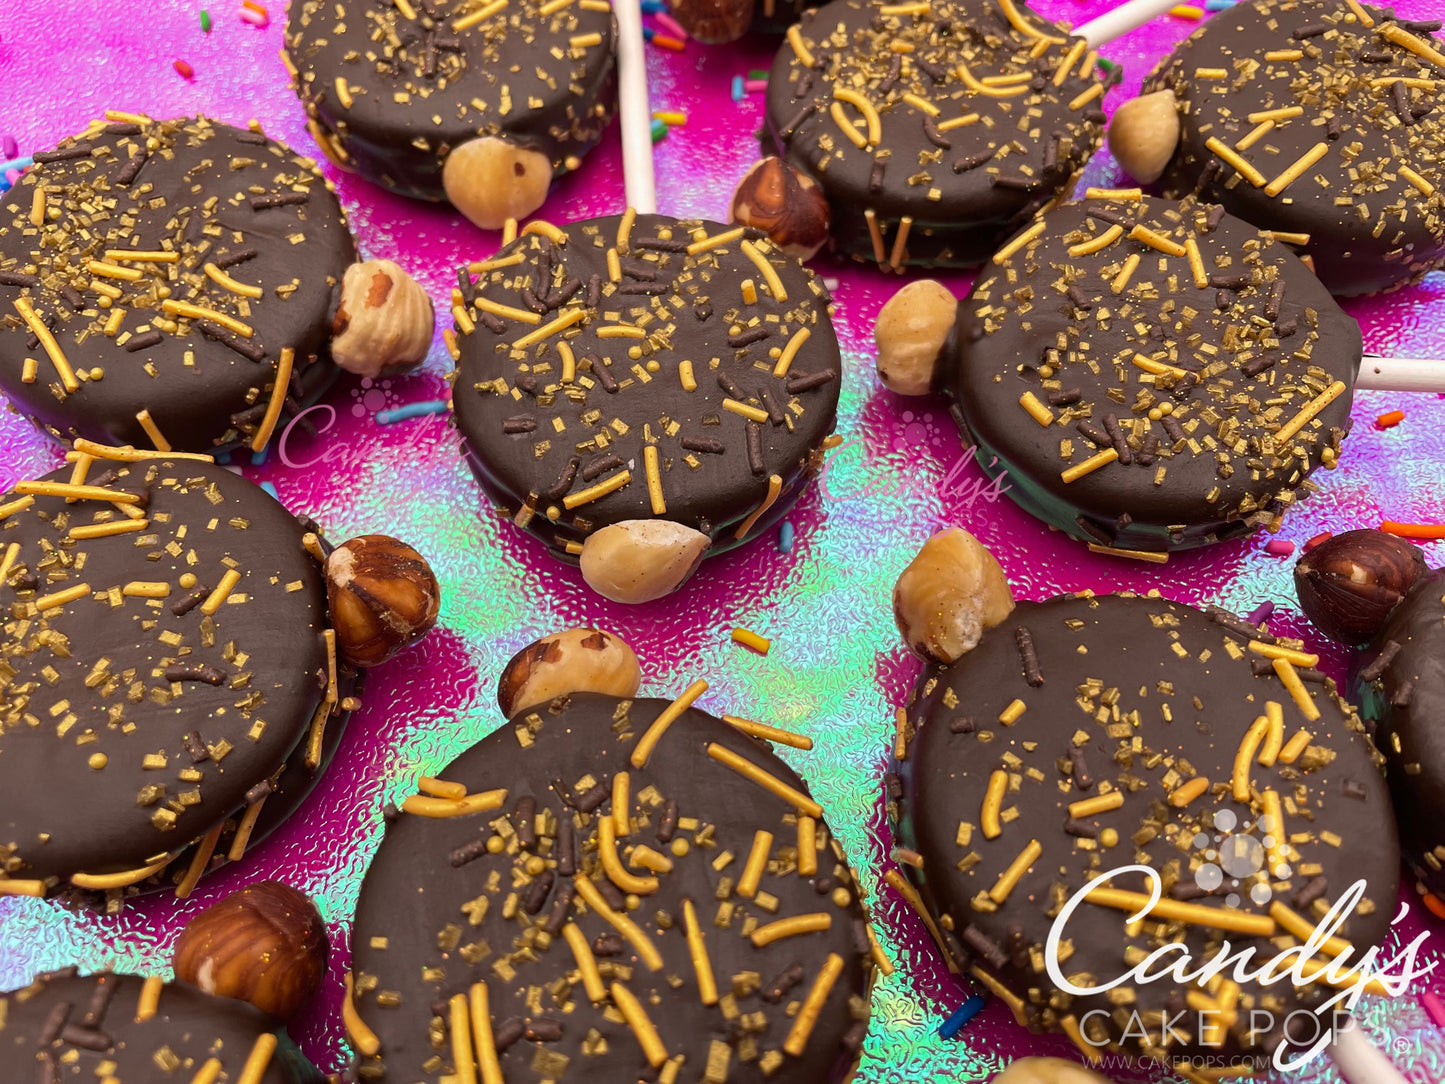 Chocolate Hazelnut Oreos (Nutella Flavor) - Candy's Cake Pops